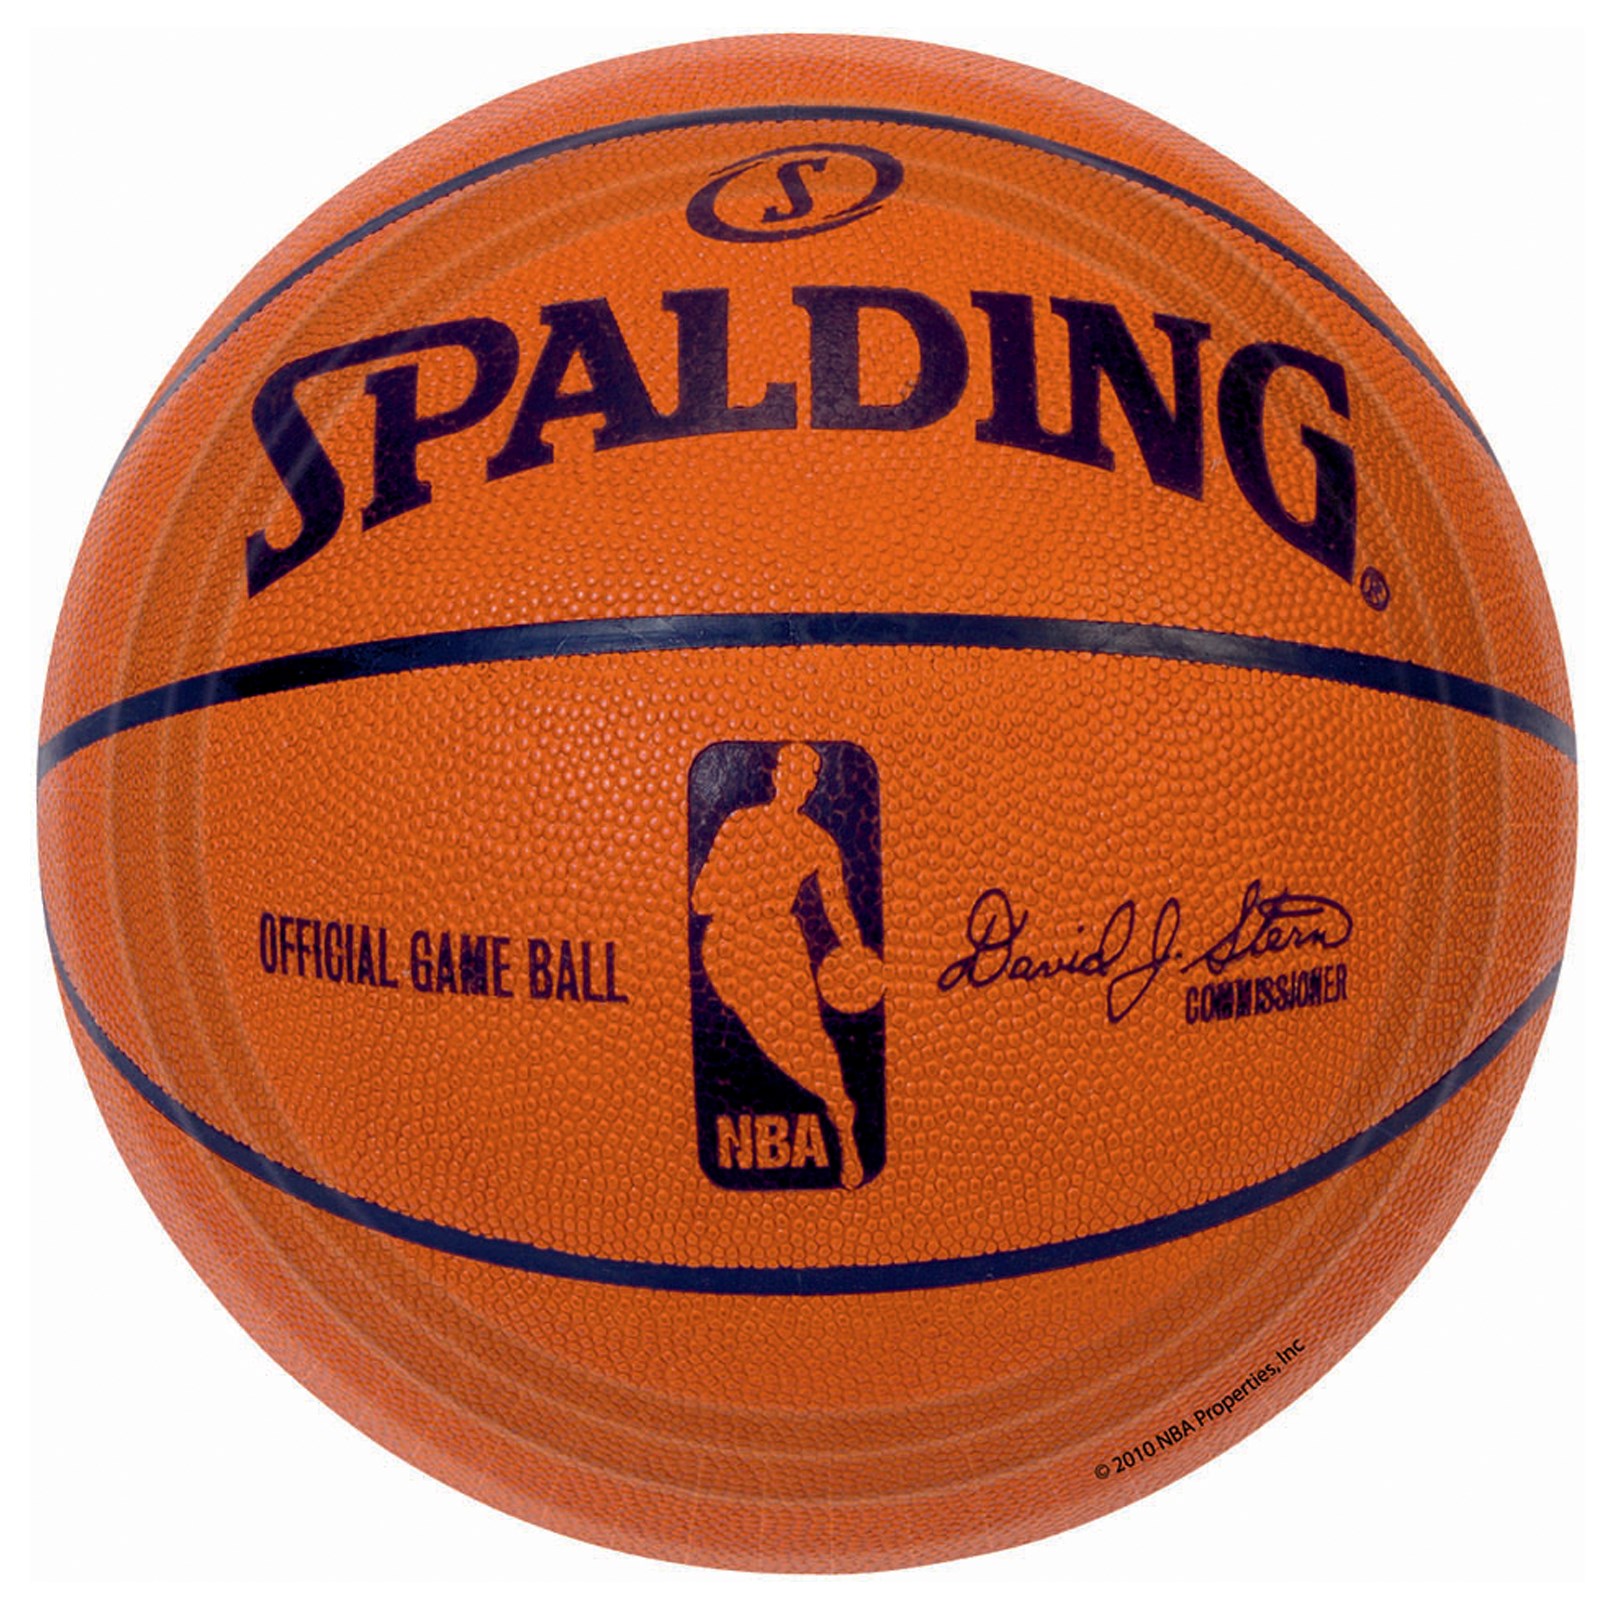 Spalding Basketball – Dessert Plates 18 count